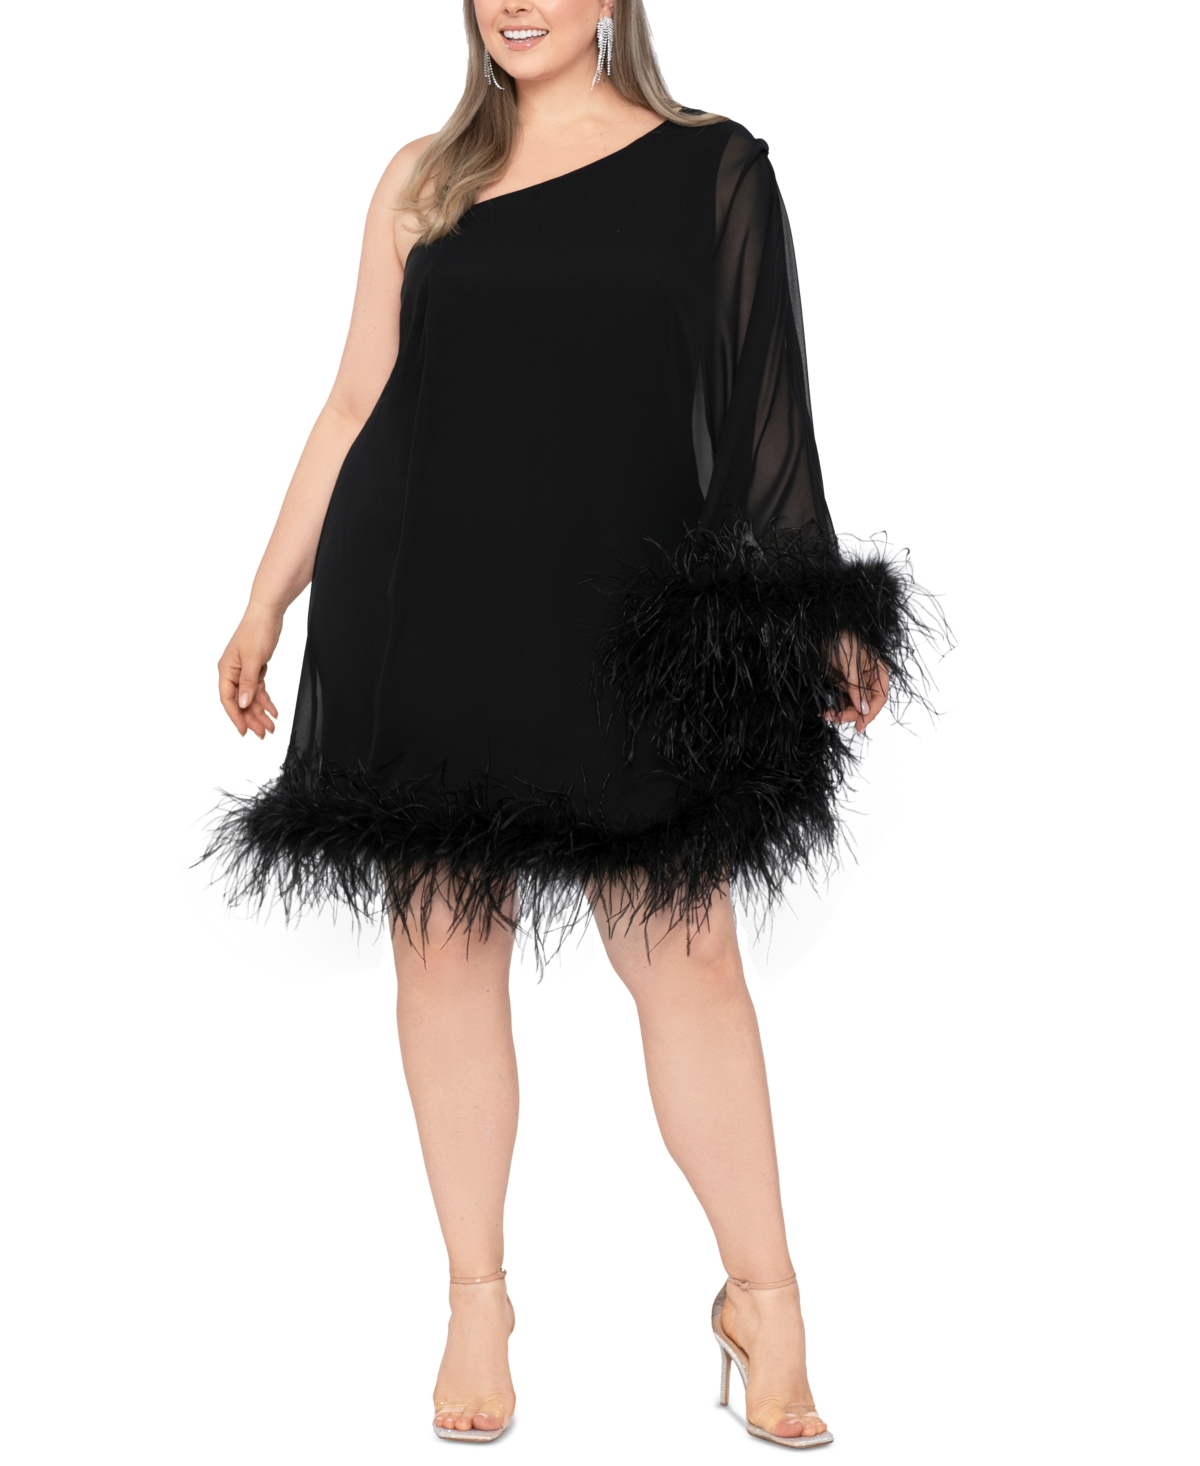 Plus Size One-Shoulder Feather-Trimmed Dress - Black